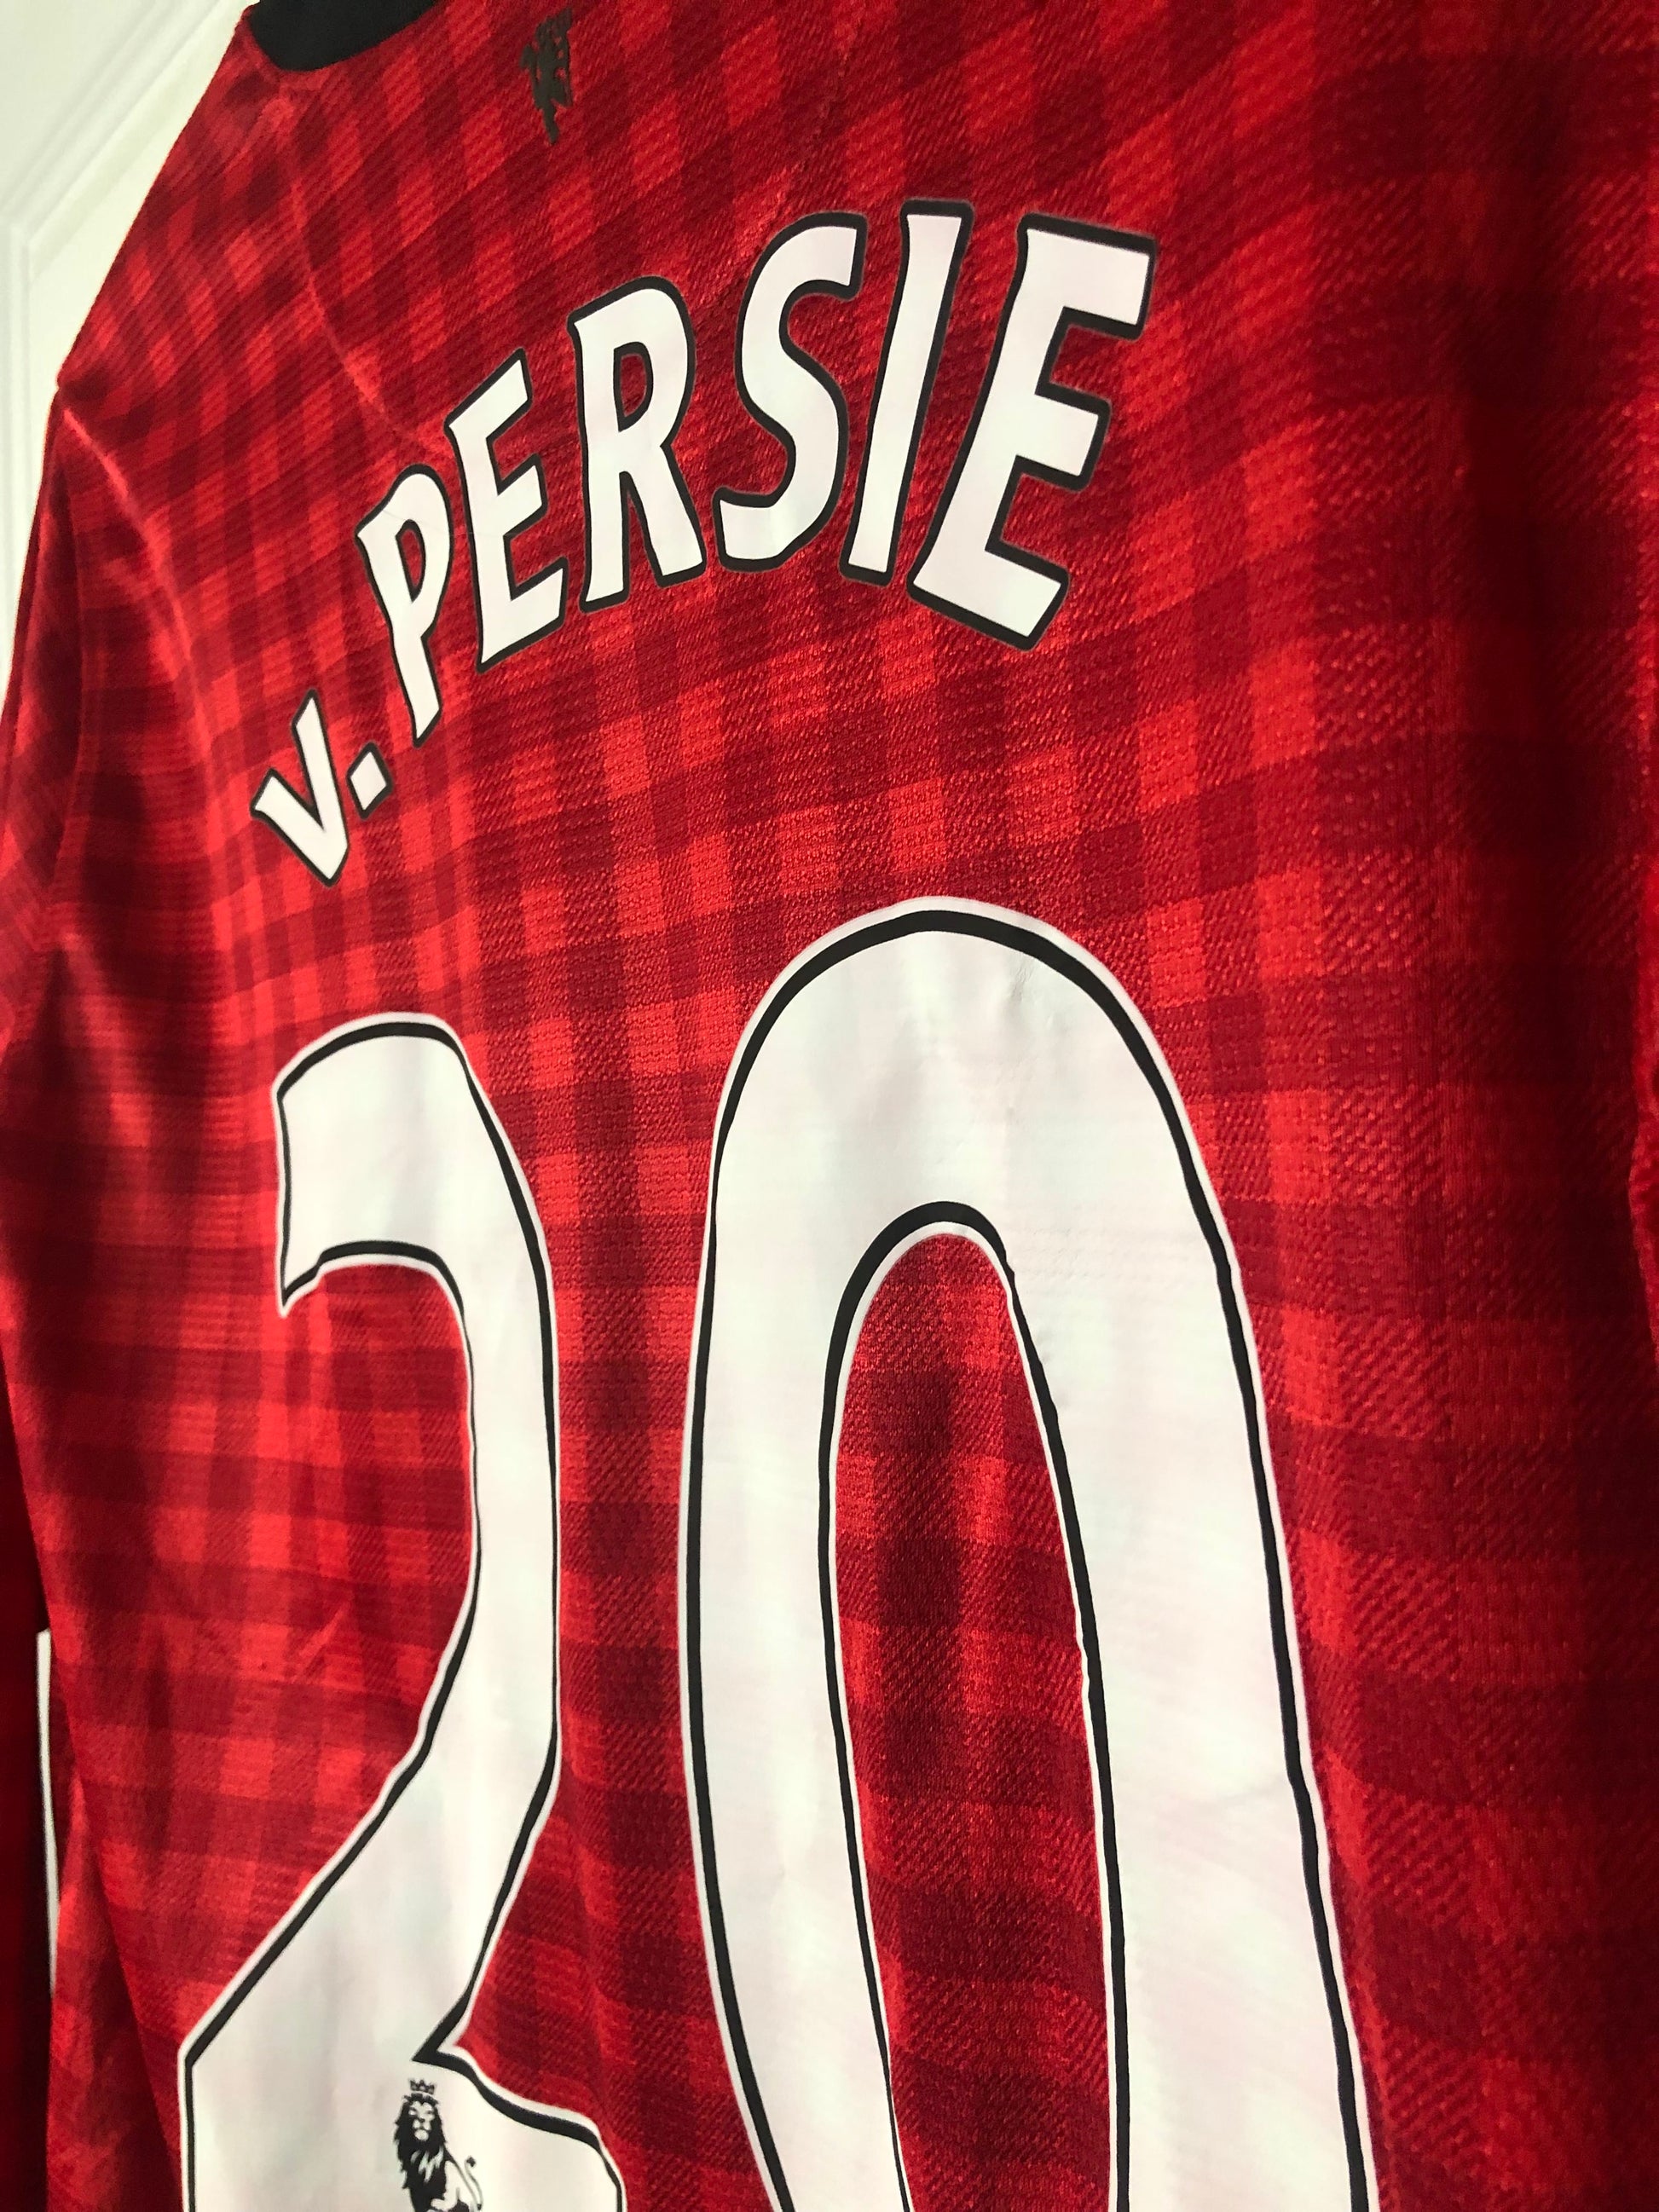 SoccerStarz Manchester United Robin Van Persie - Home Kit 2014